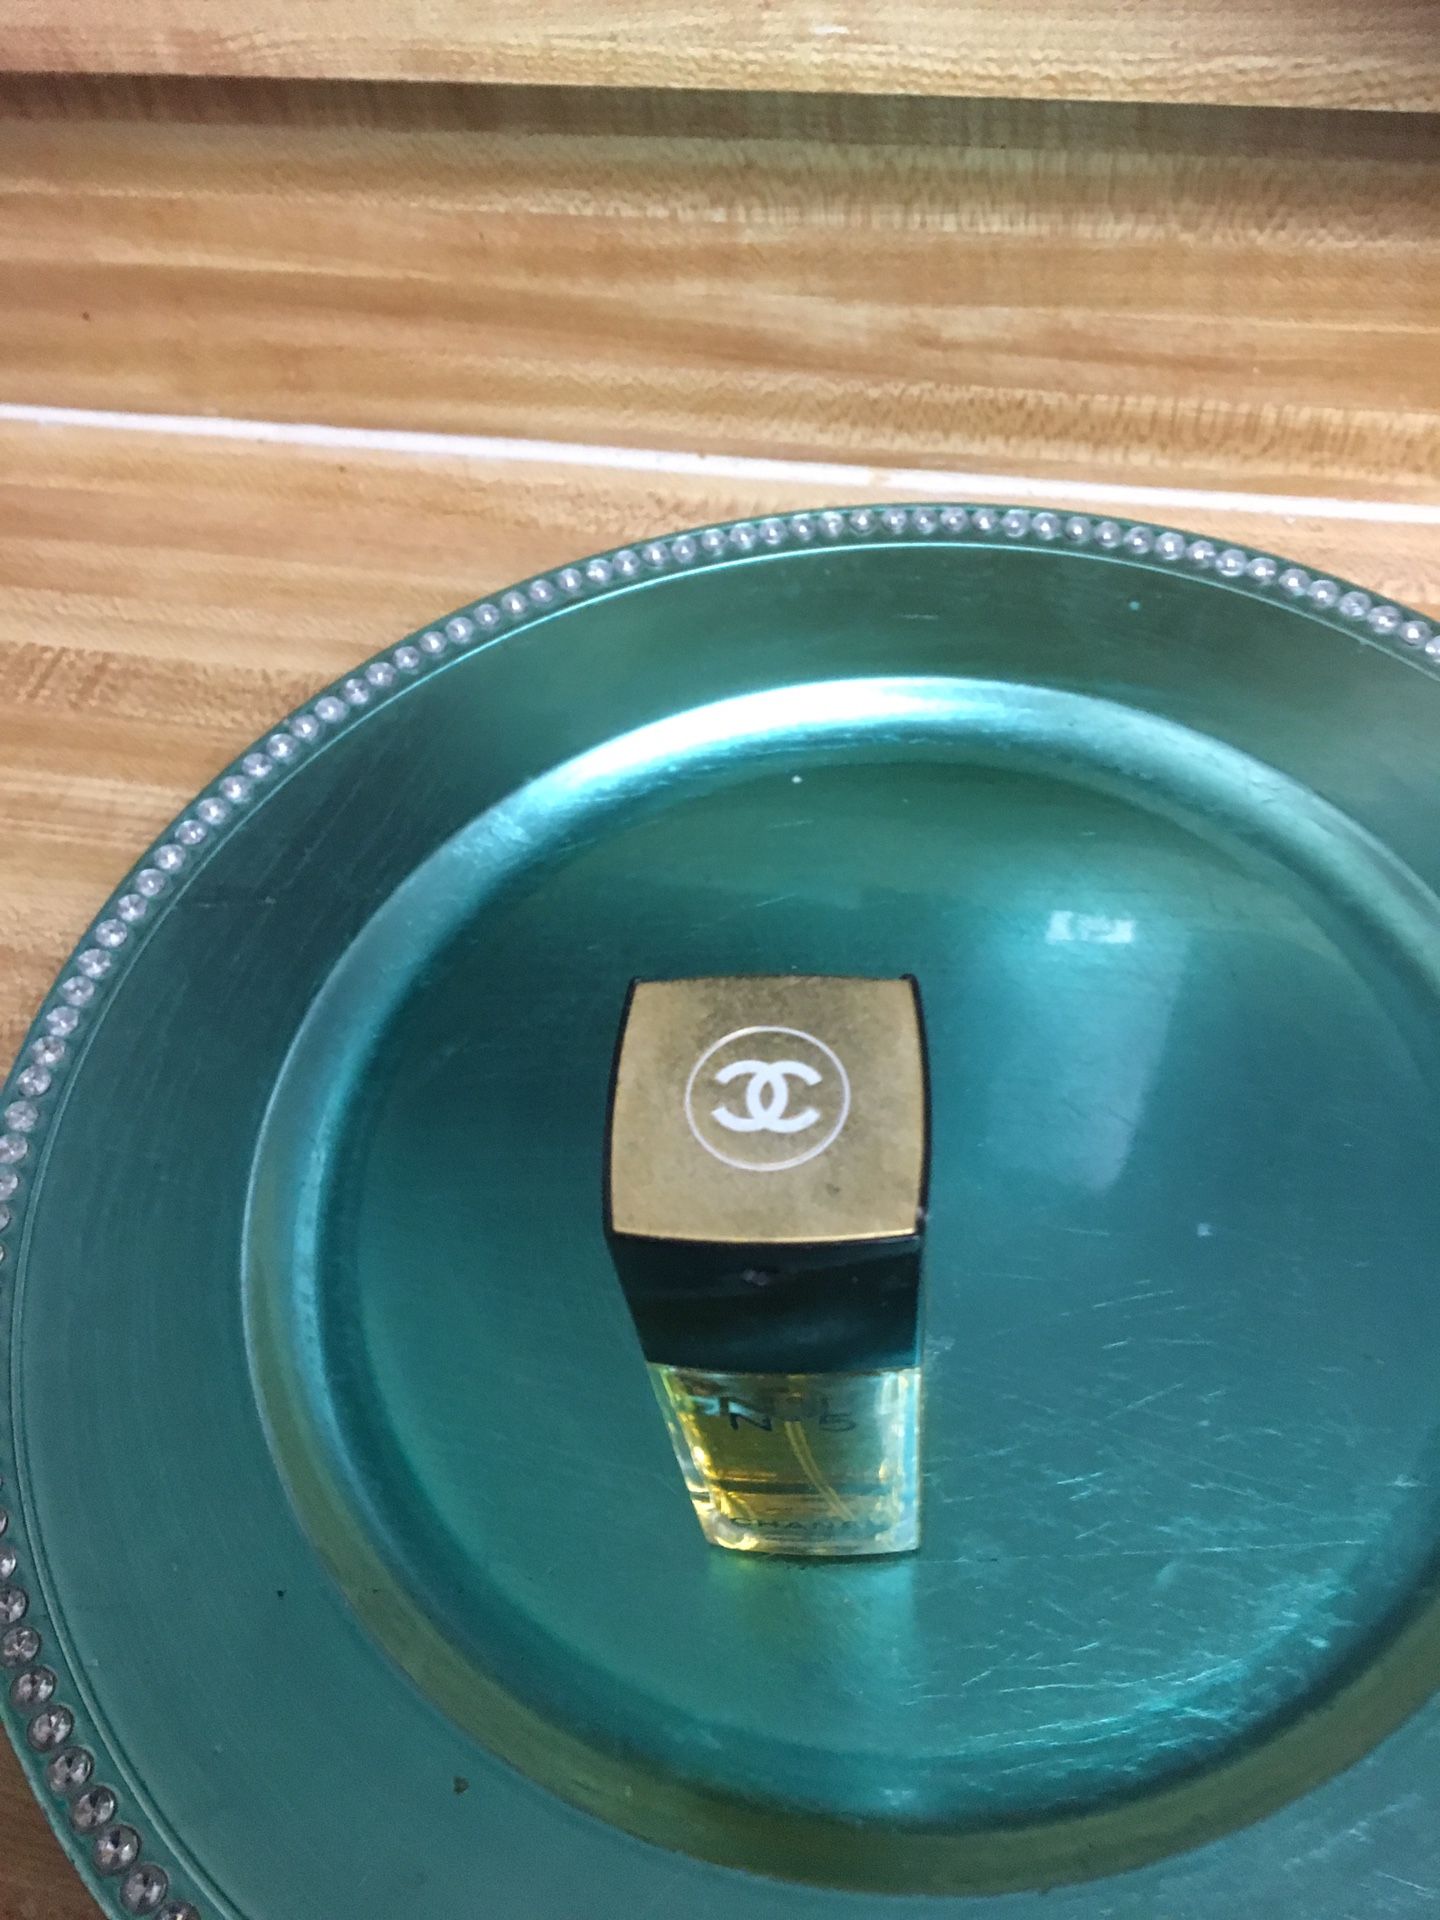 Chanel No 5 perfume